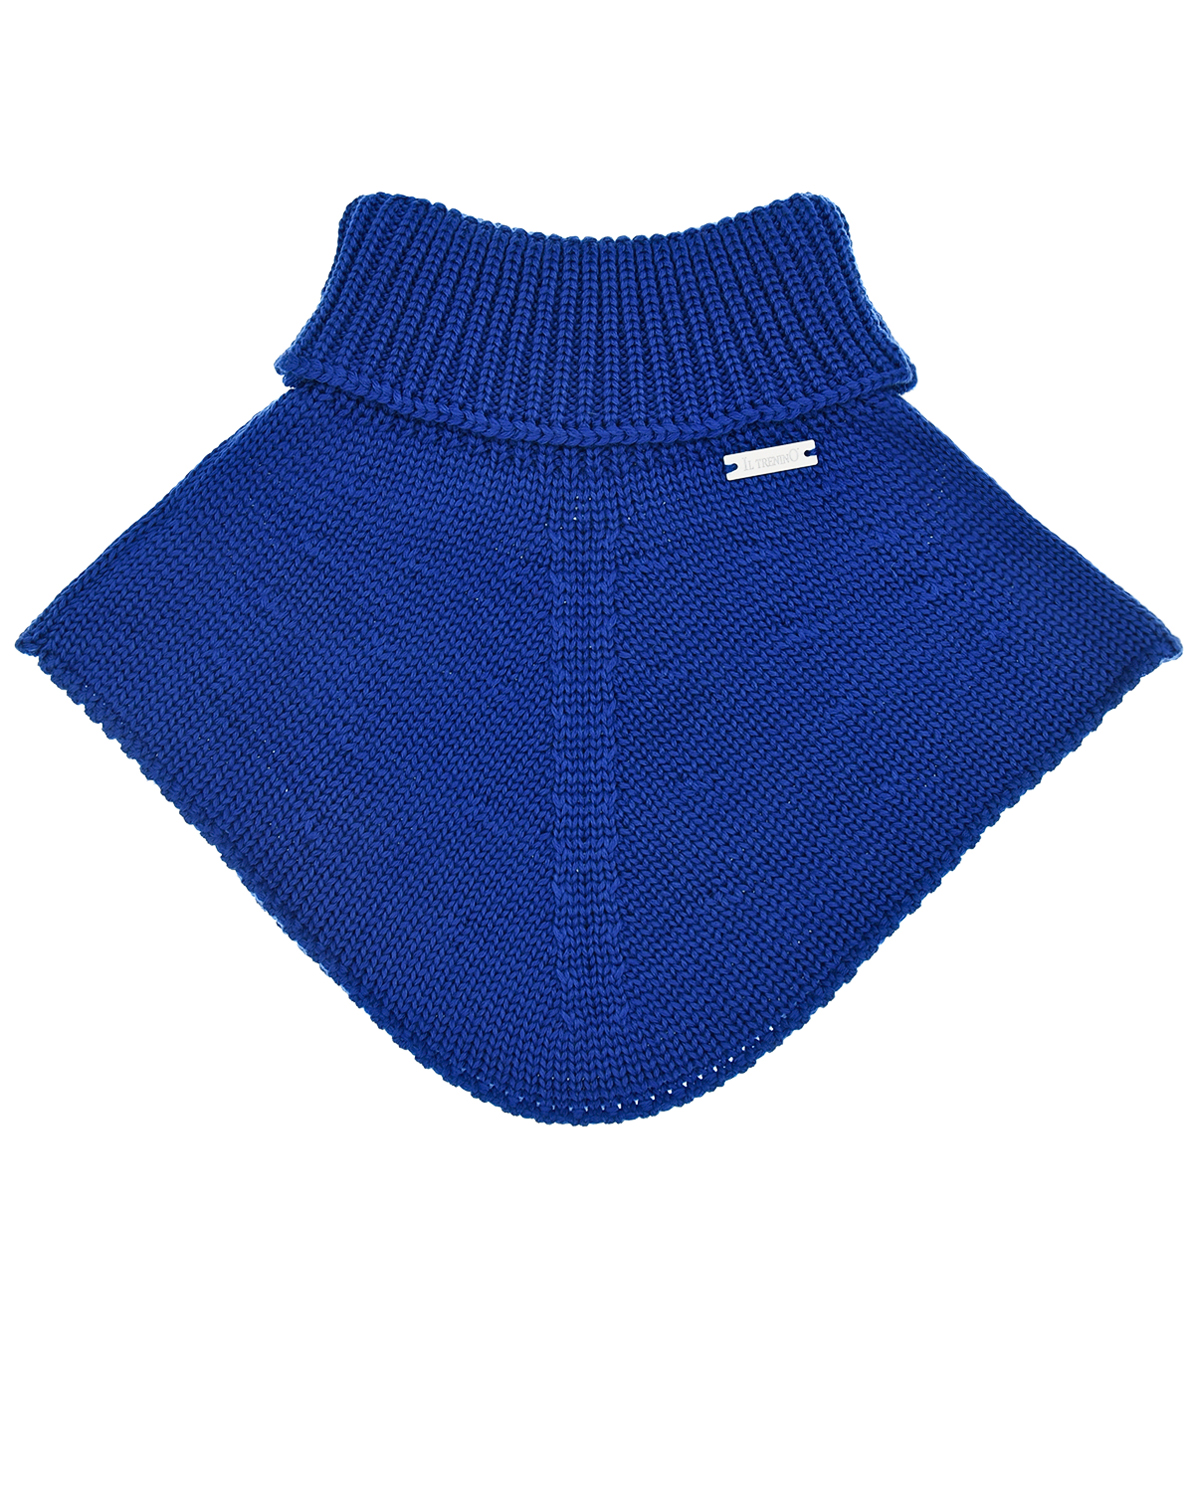 Ярко-синий шарф-горло Il Trenino детское, размер unica